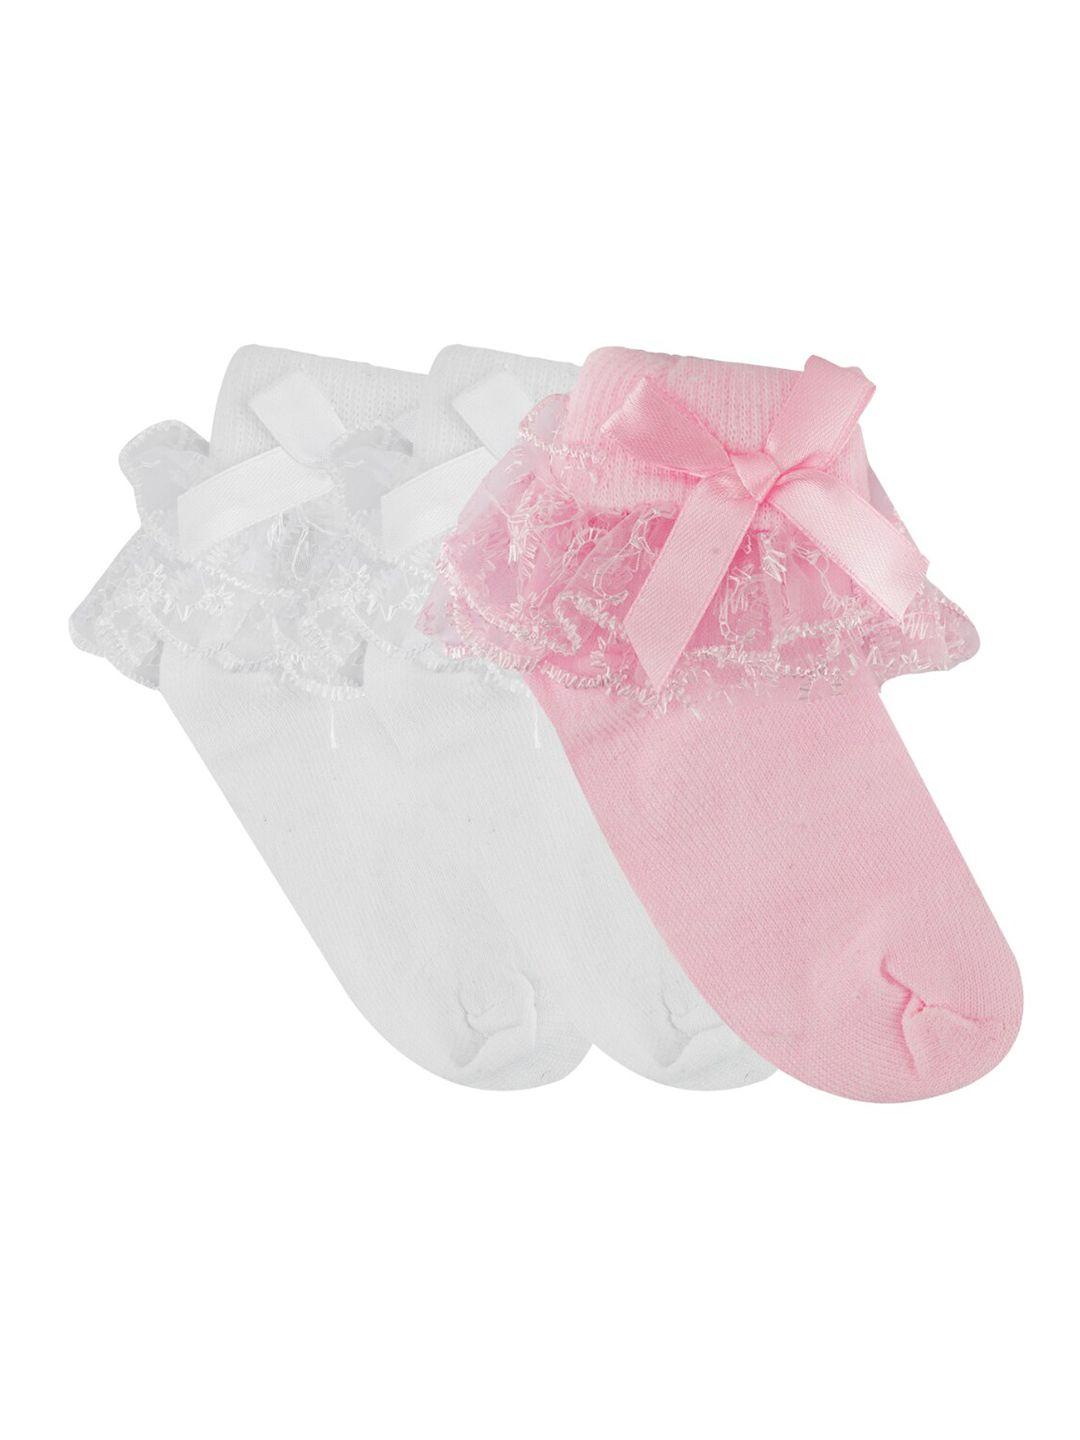 n2s next2skin infant girls pack of 3 assorted super combed cotton calf-length socks